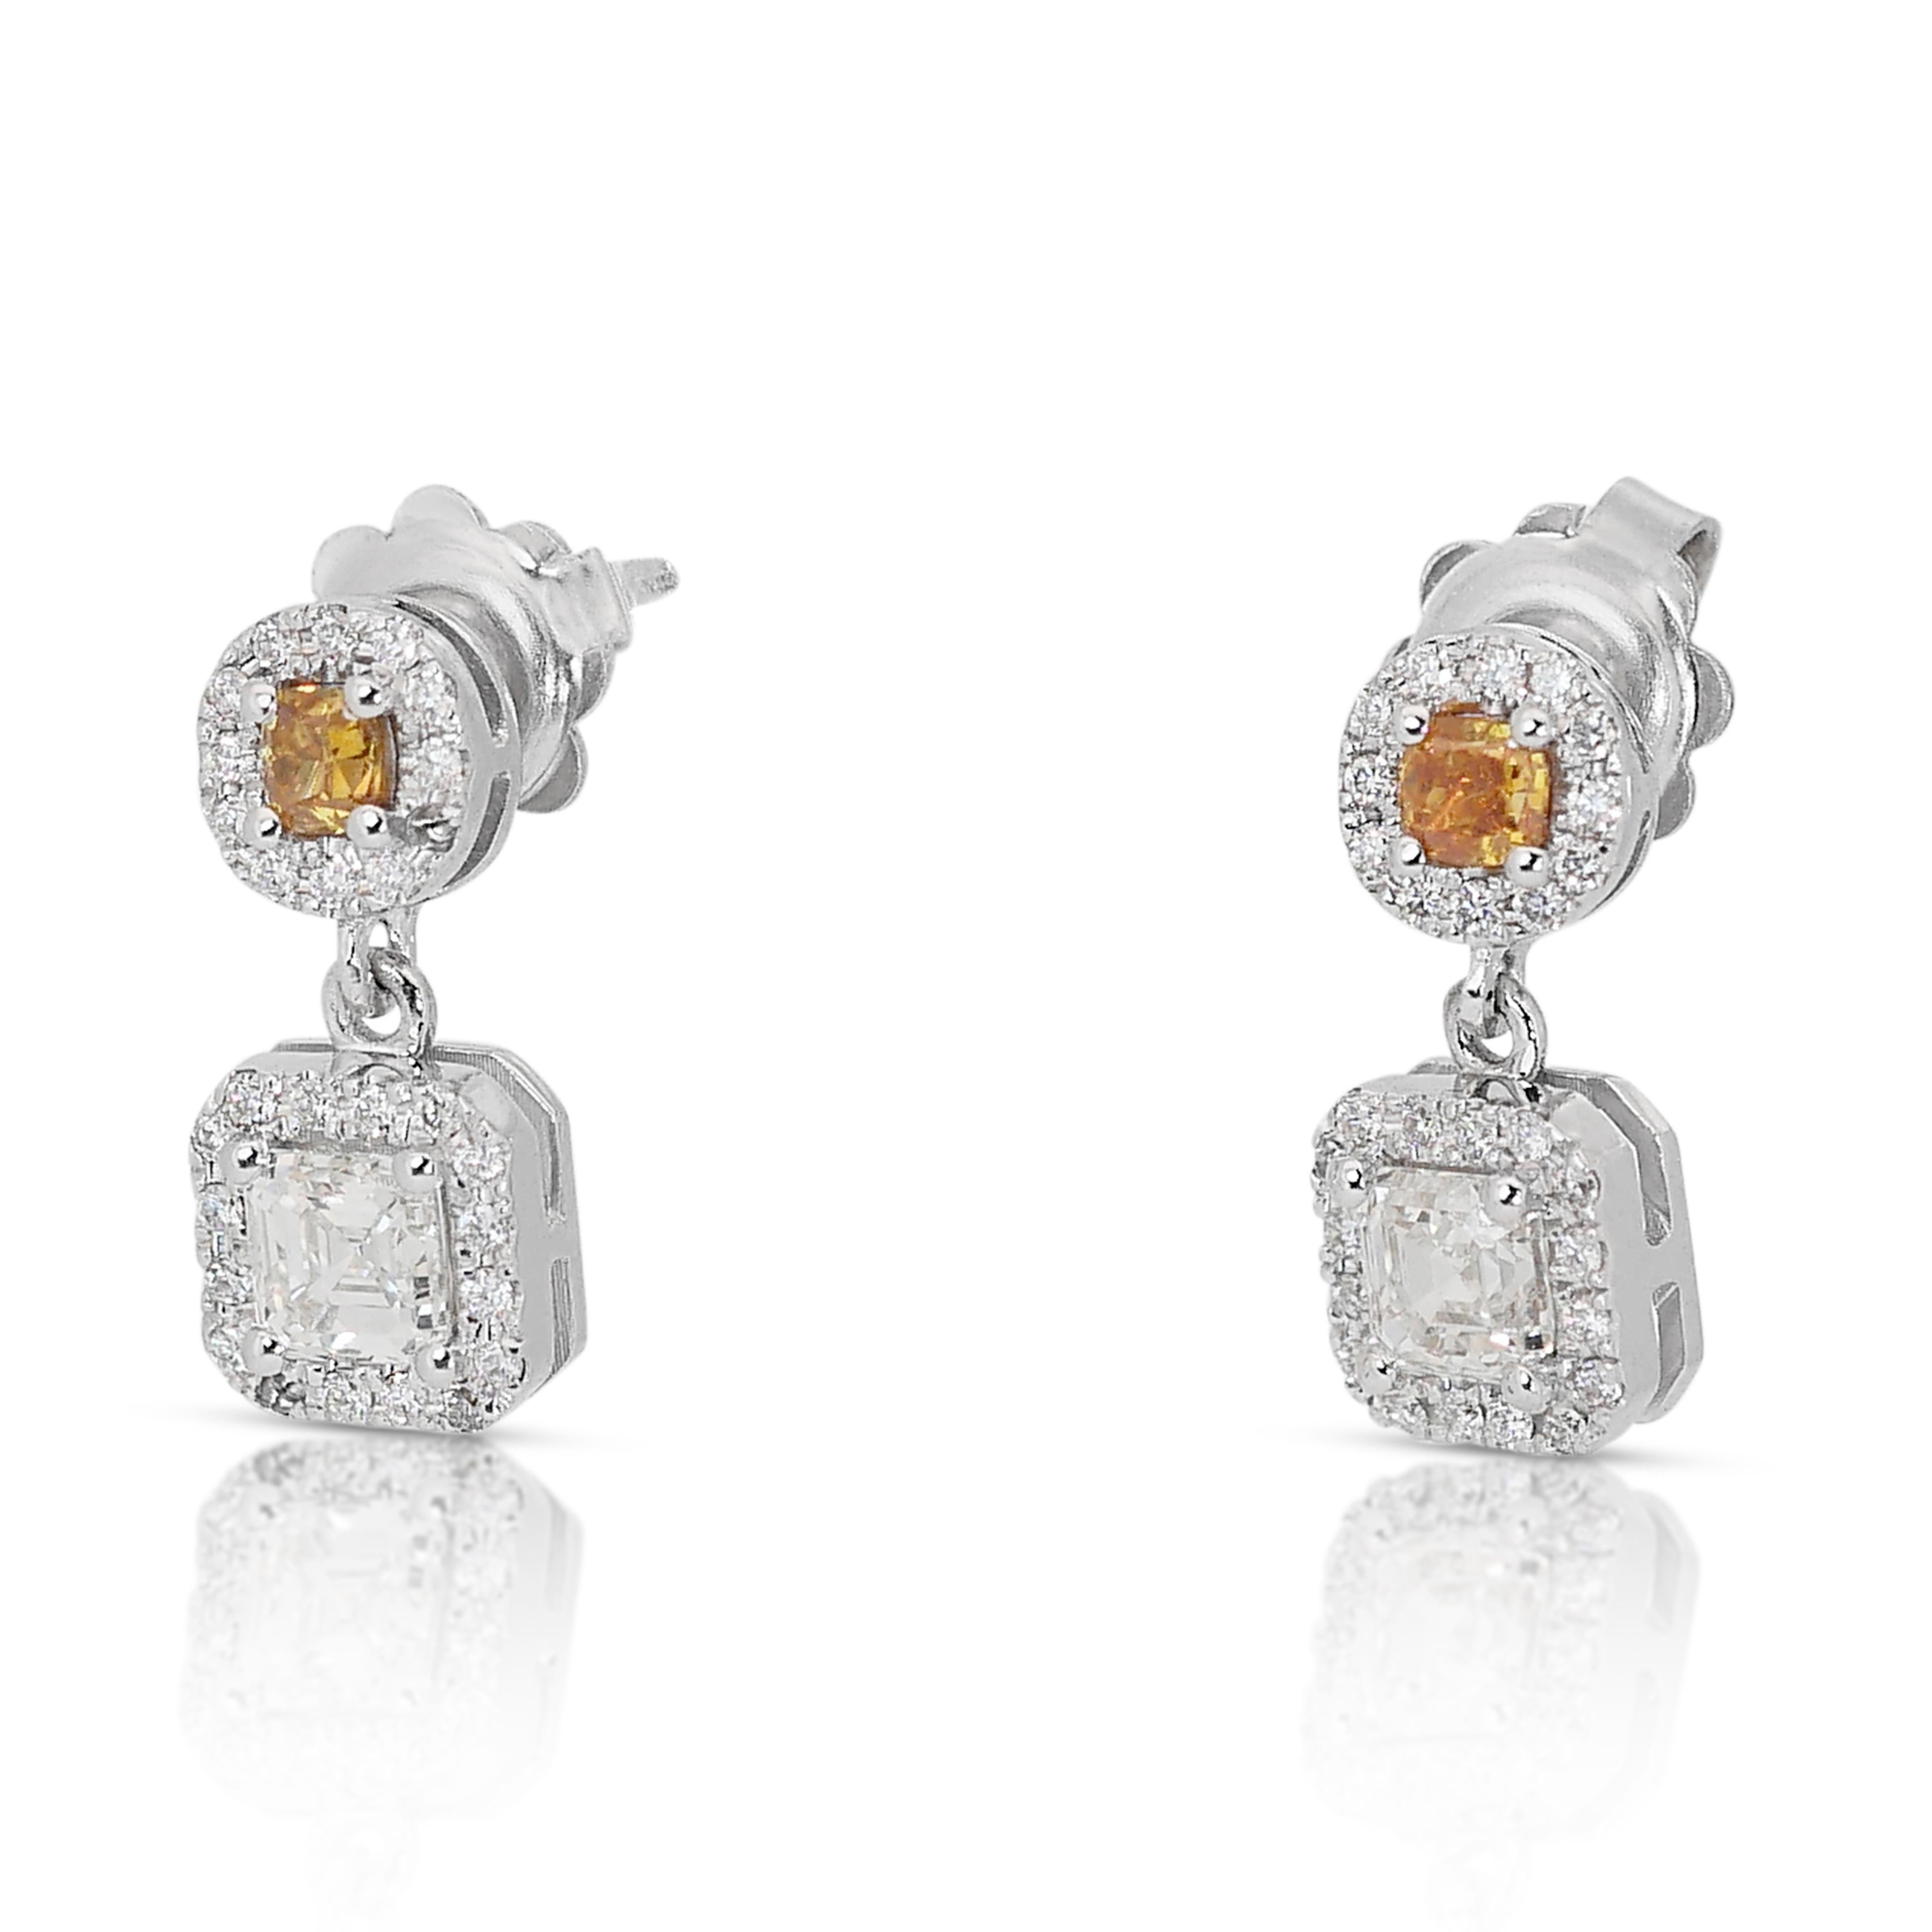 Square Cut Captivating 1.27ct Diamonds Drop Earrings in 14k White Gold - IGI Certified